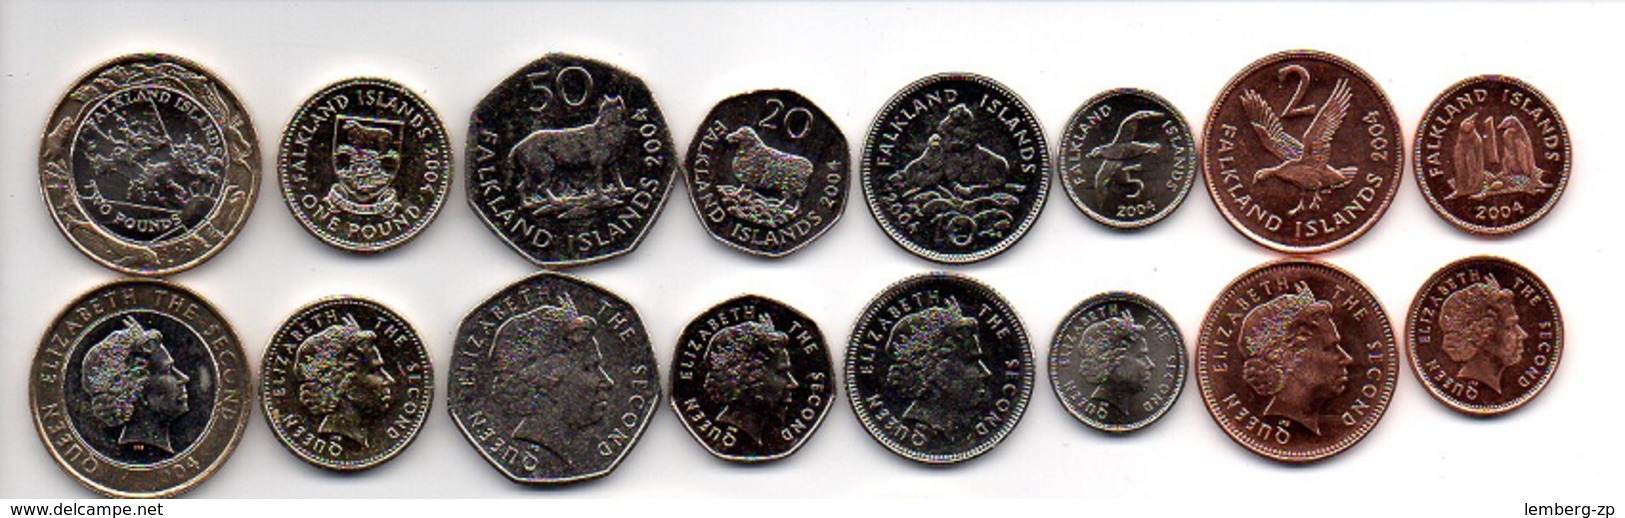 Falkland Islands - Set 8 Coins 1 2 5 10 20 50 1 2 Pounds 2004 AUNC Lemberg-Zp - Falkland